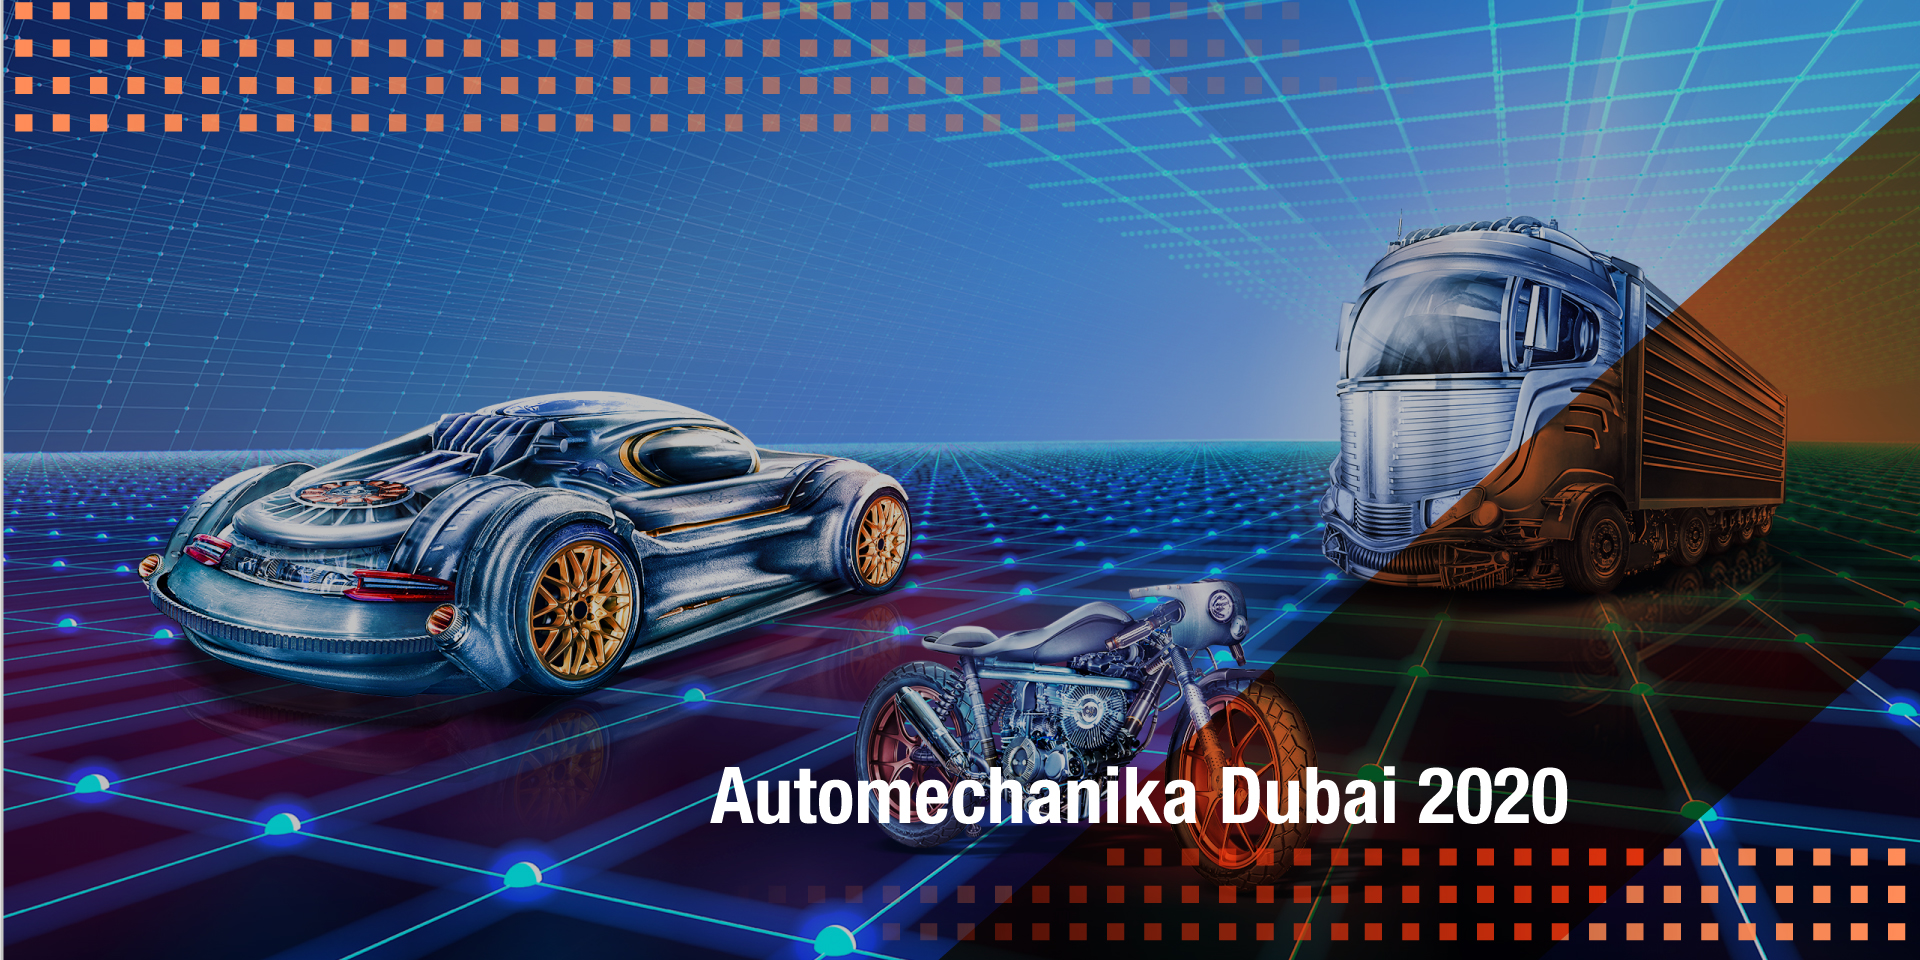 Automechanika Dubai 2020